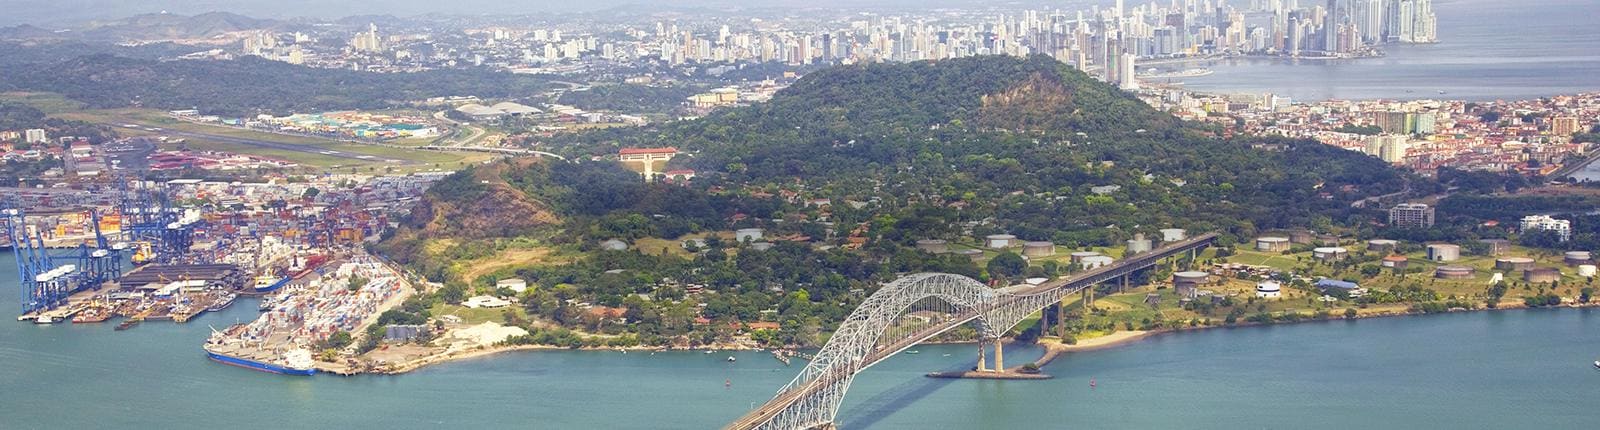 View of the city of Colon, Panama alongside the Panama Canal